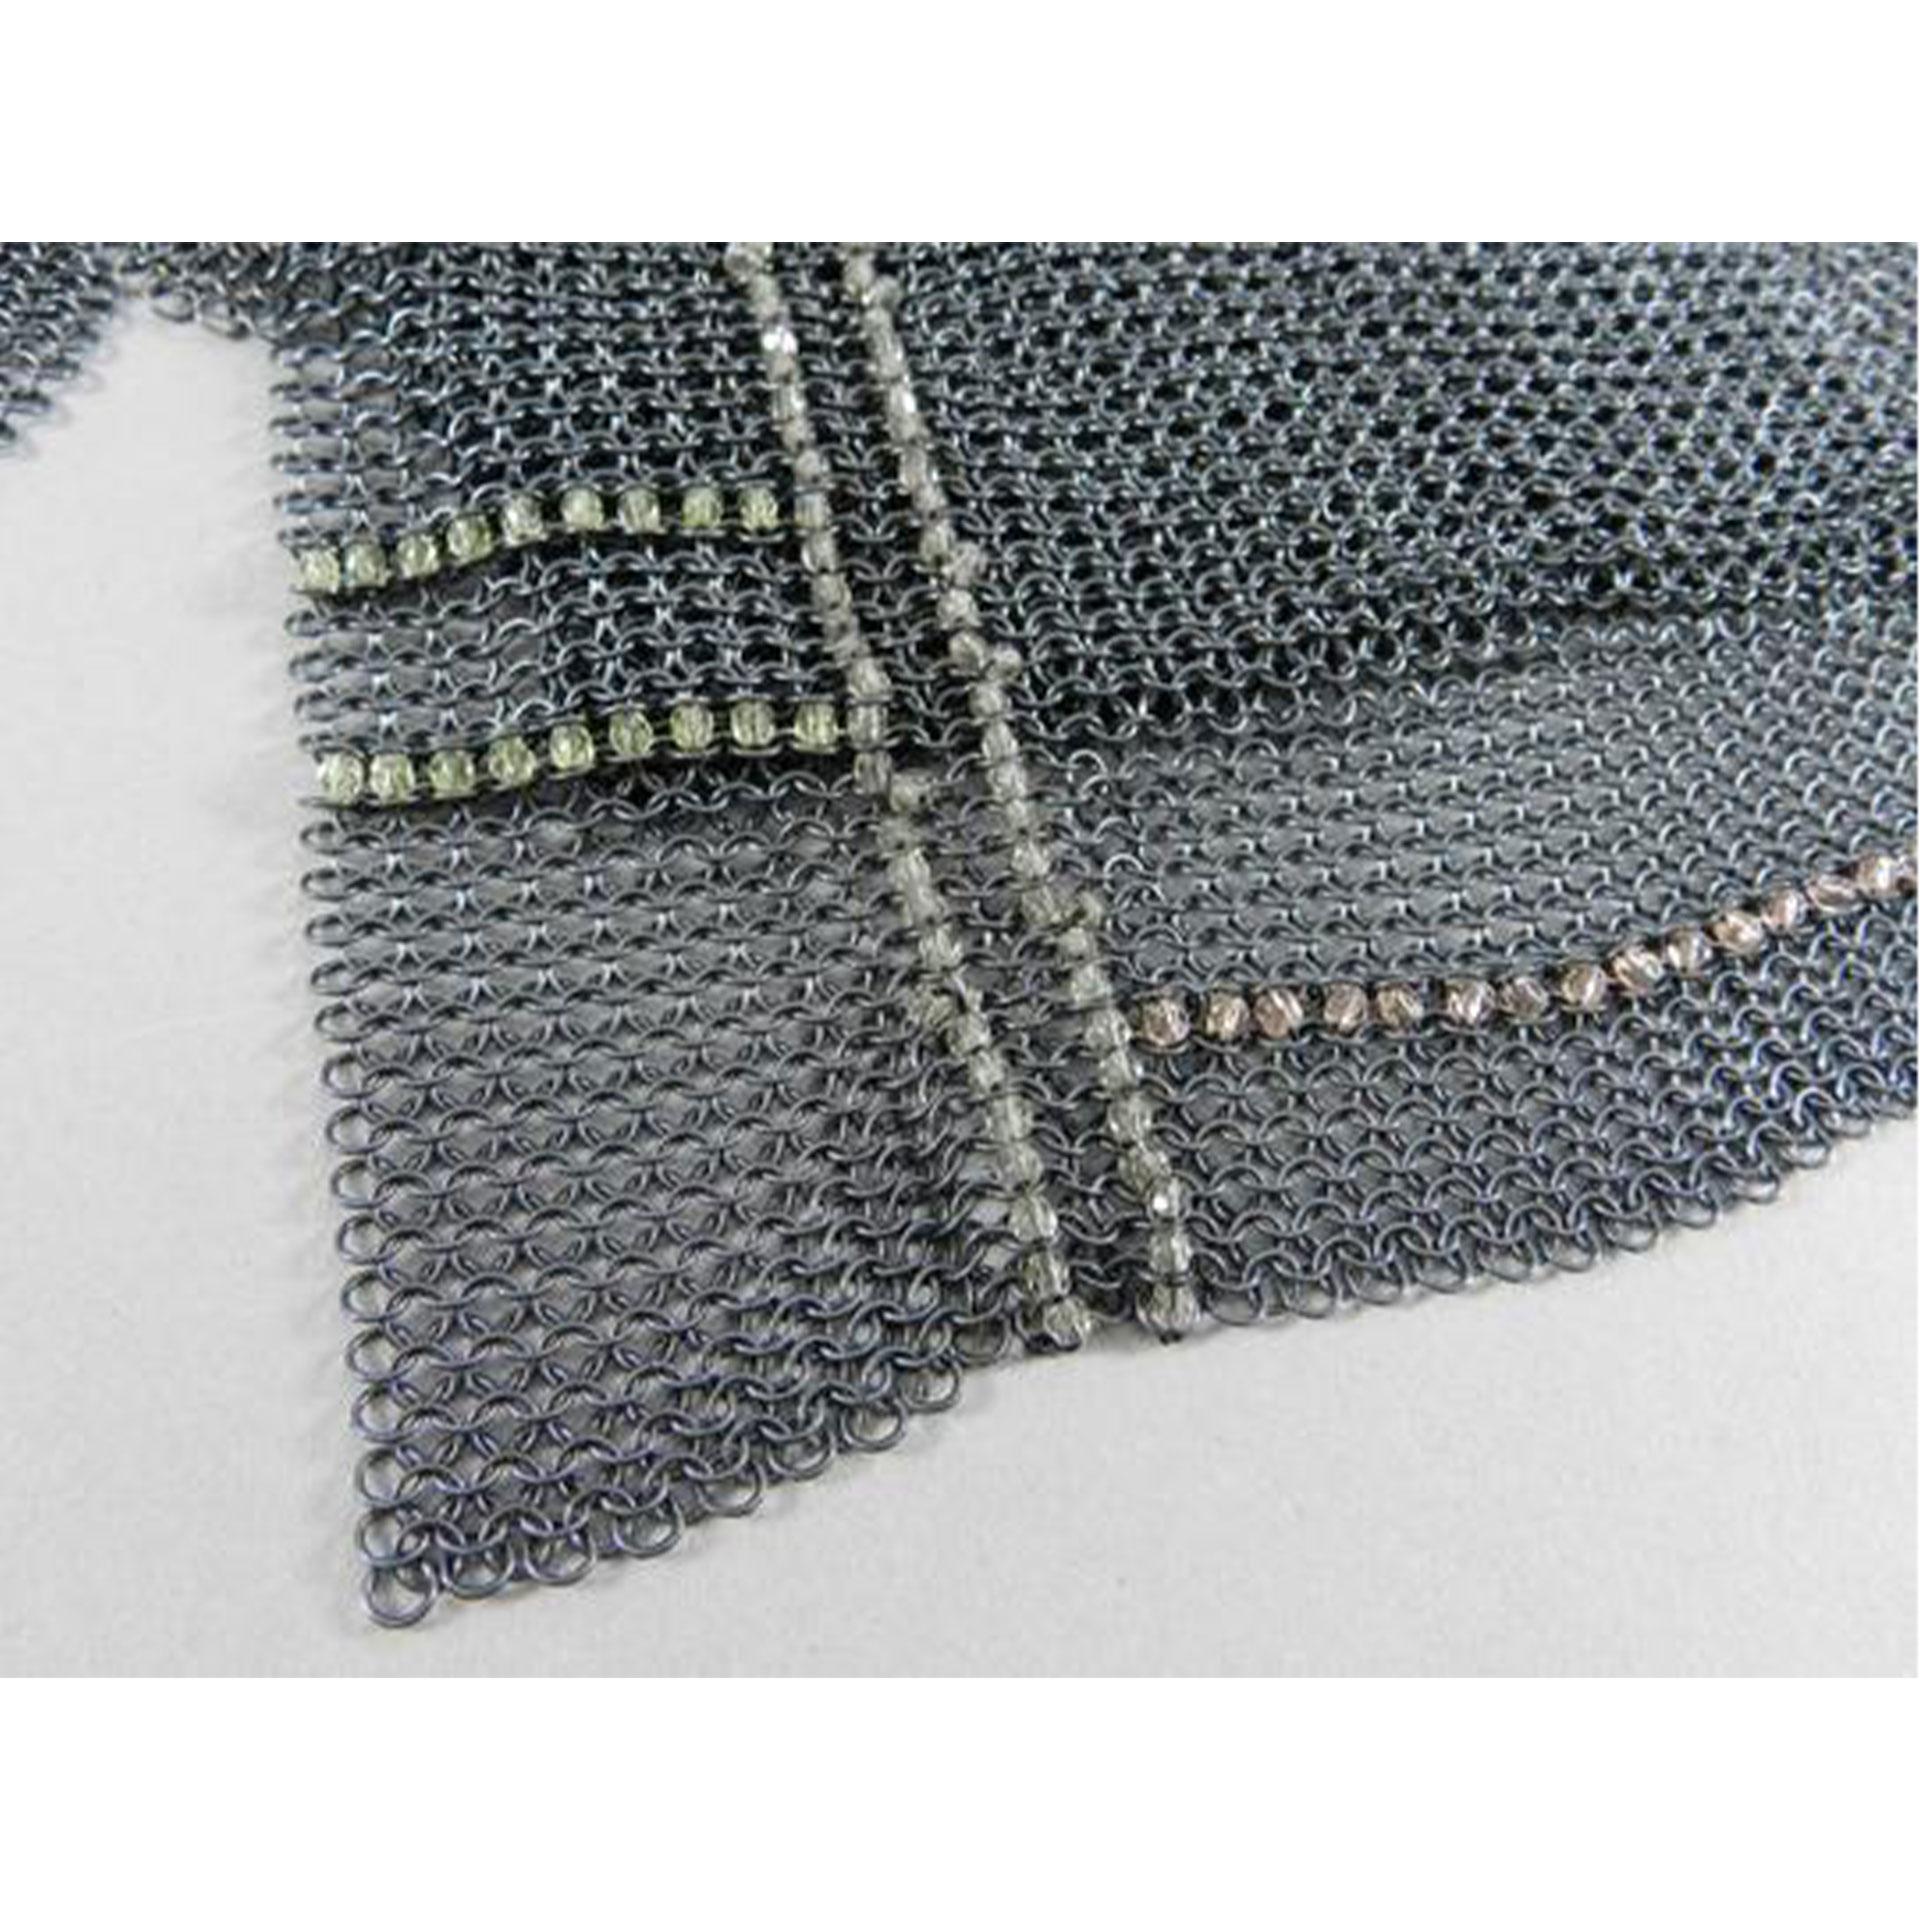 Women's or Men's Chanel Waist Vintage 1999 Spring Mesh Belt Bum Fanny Pack Cross Body Chain Bag For Sale